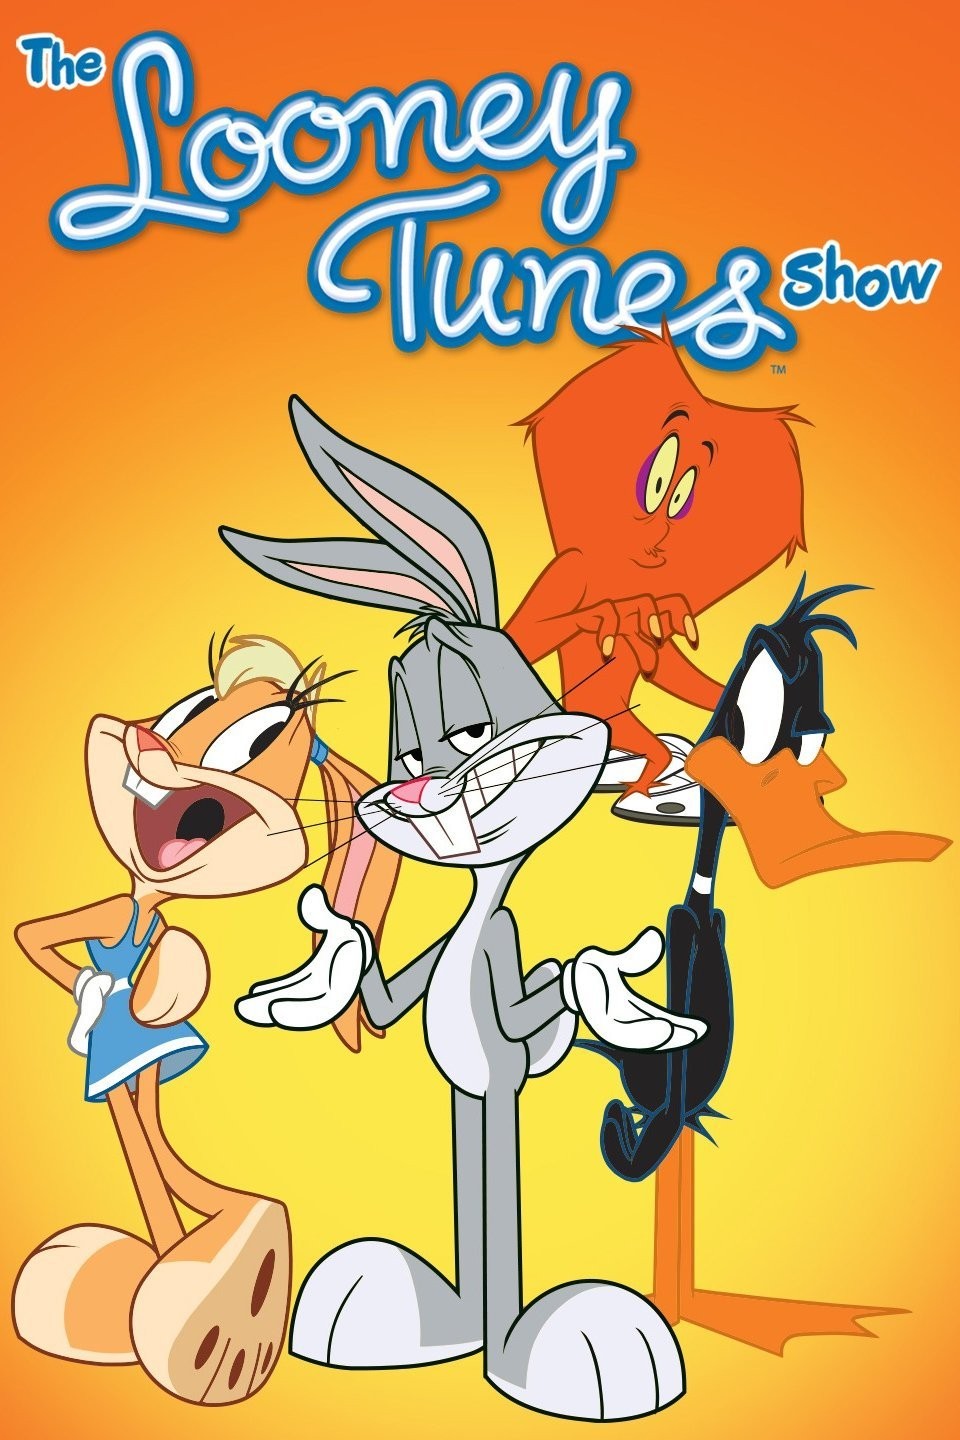 90 years of “Looney Tunes”